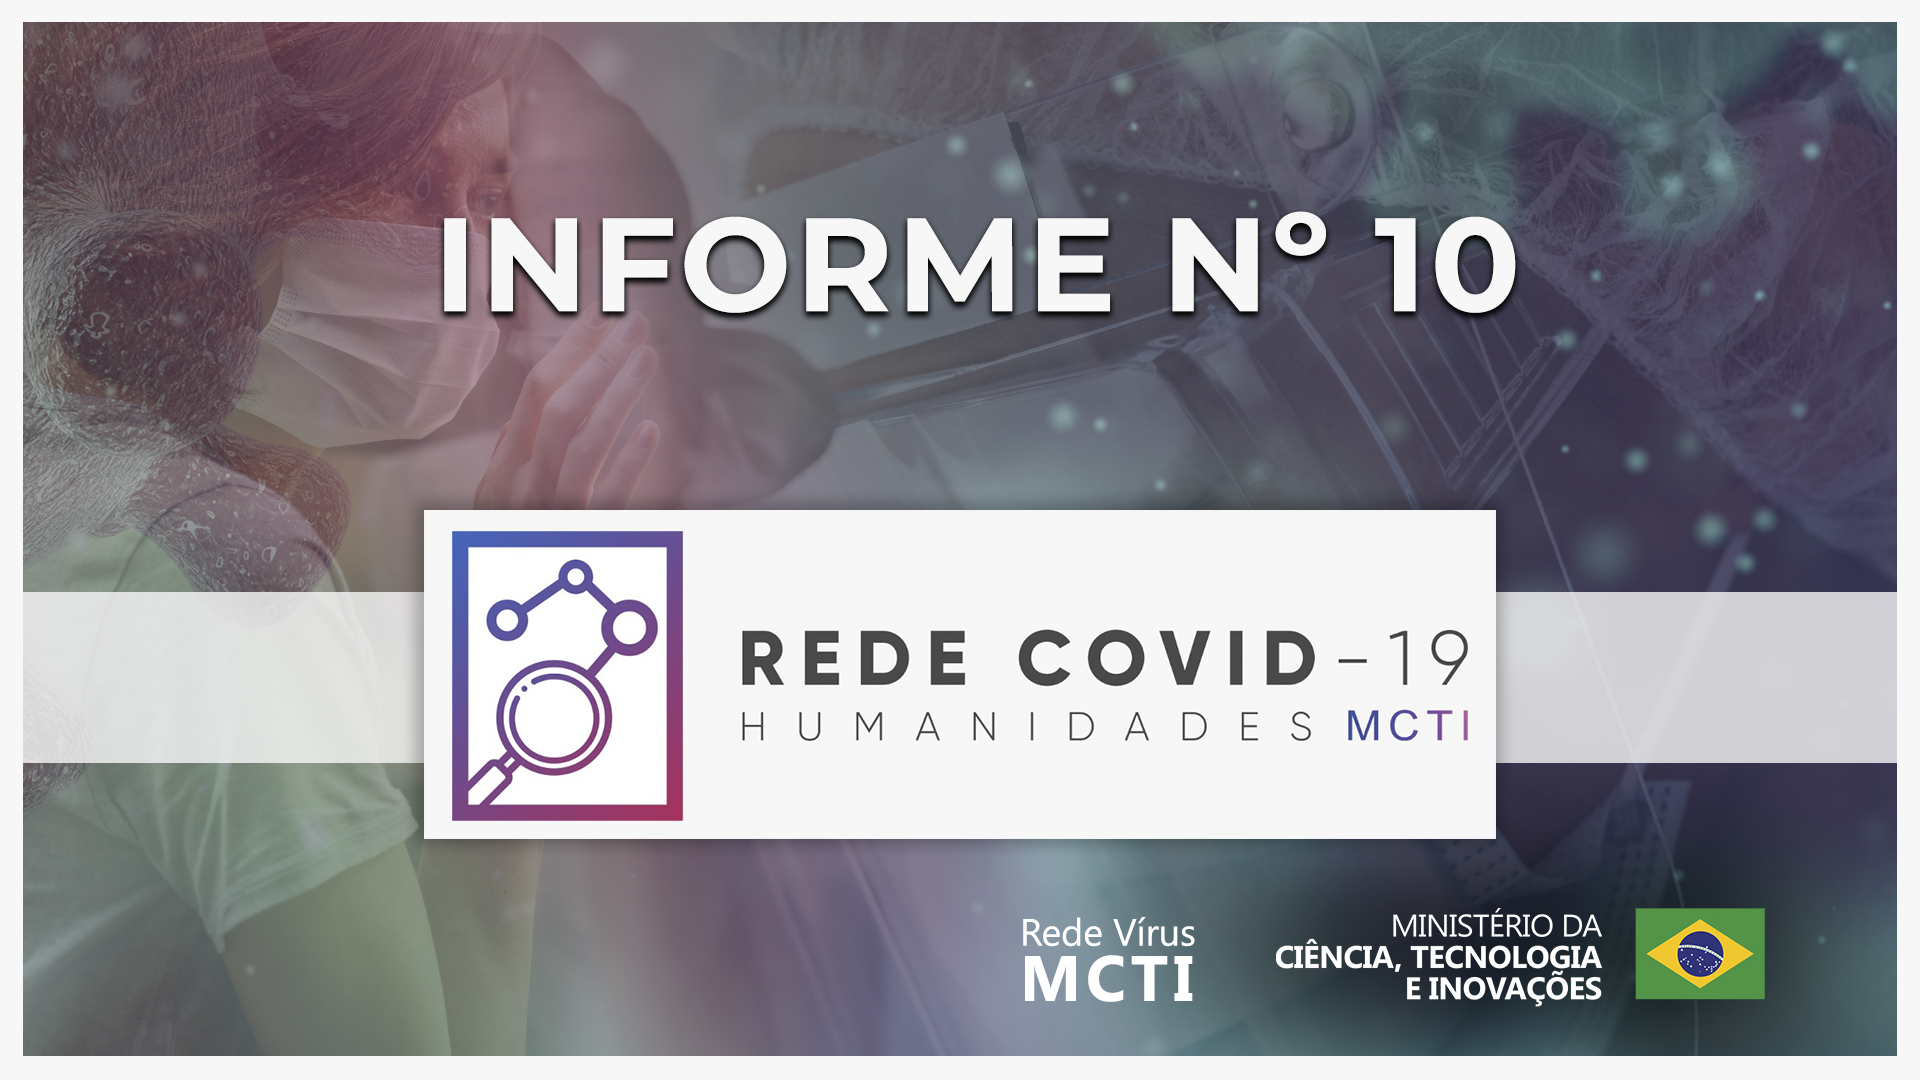 INFORME Nº 10 – REDE COVID-19 HUMANIDADES MCTI